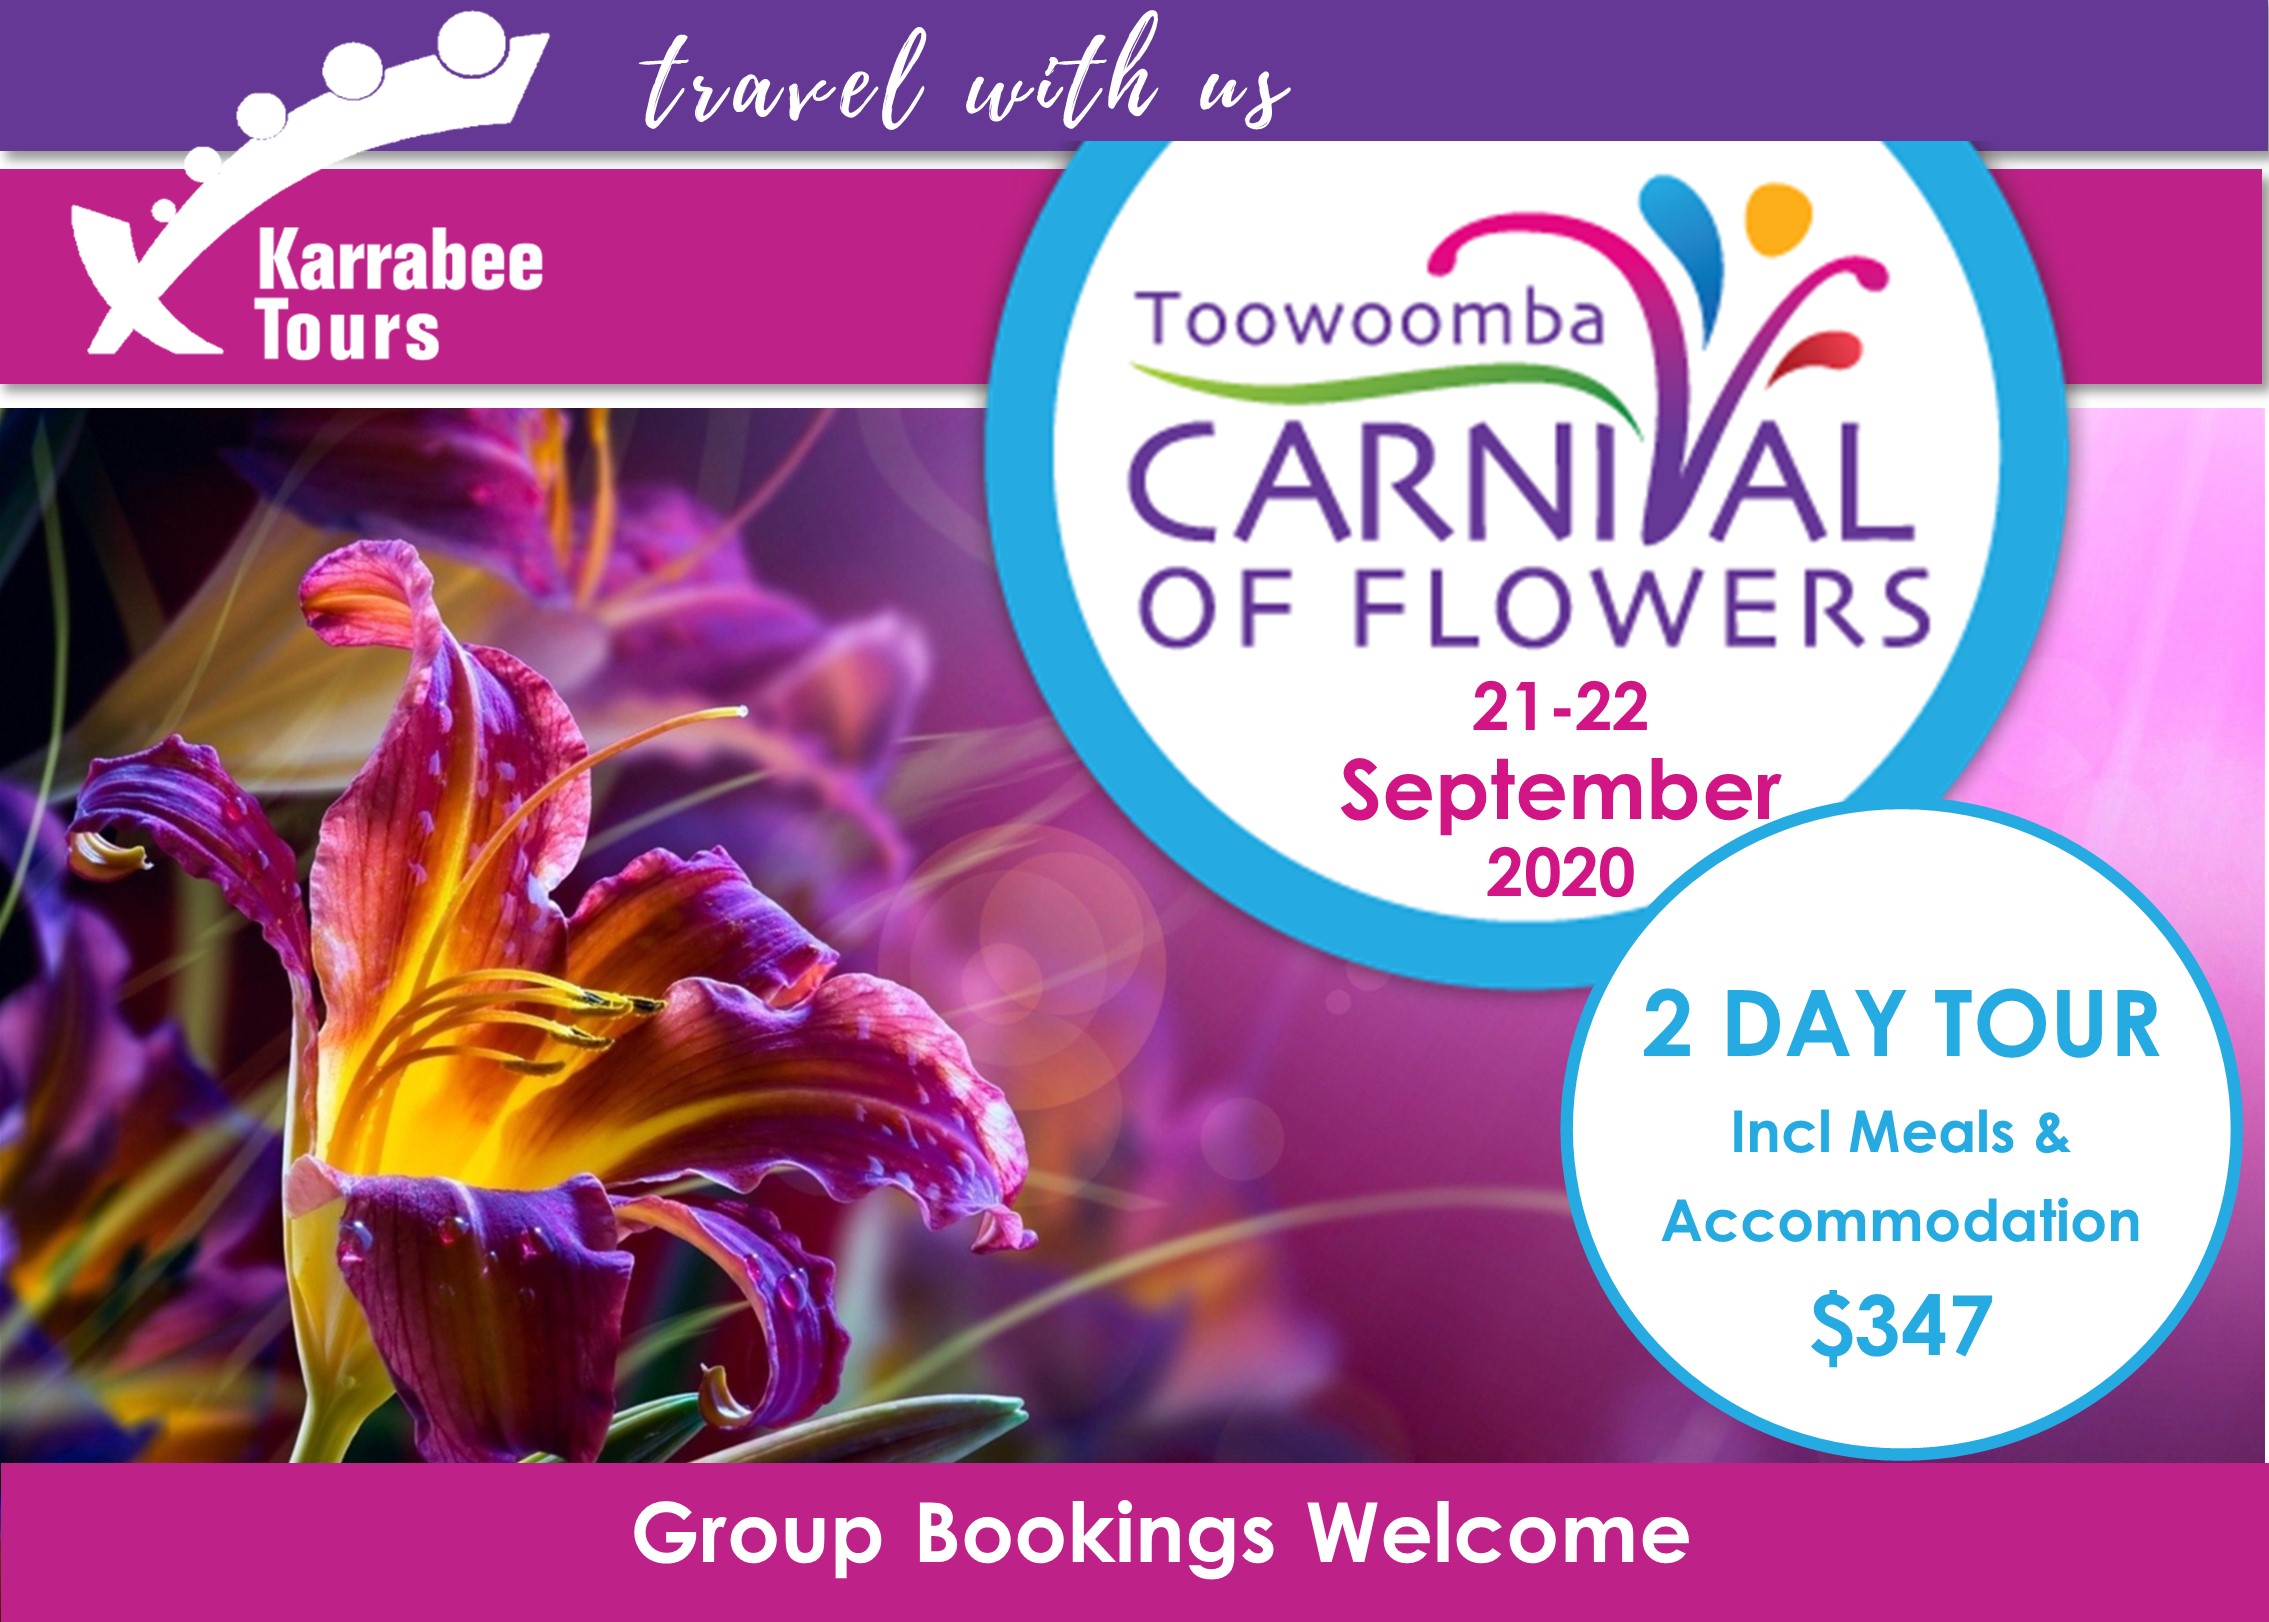 Toowoomba Carnival Of Flowers 2020 Karrabee